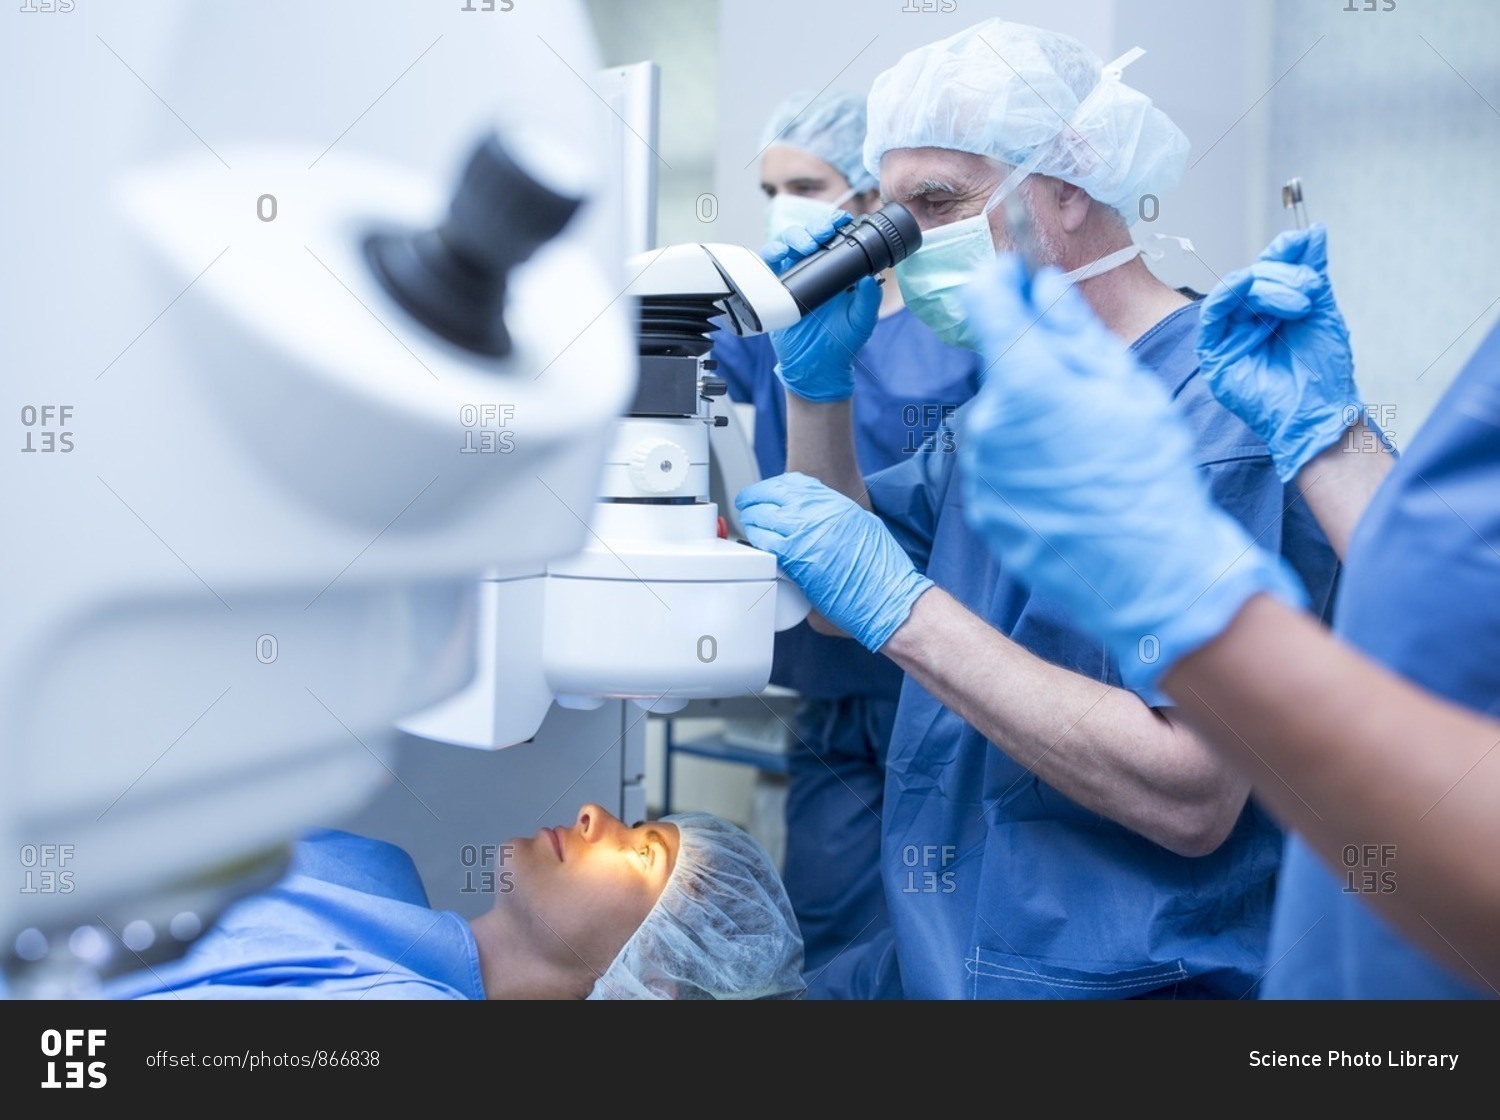 Surgical team performing laser eye surgery.